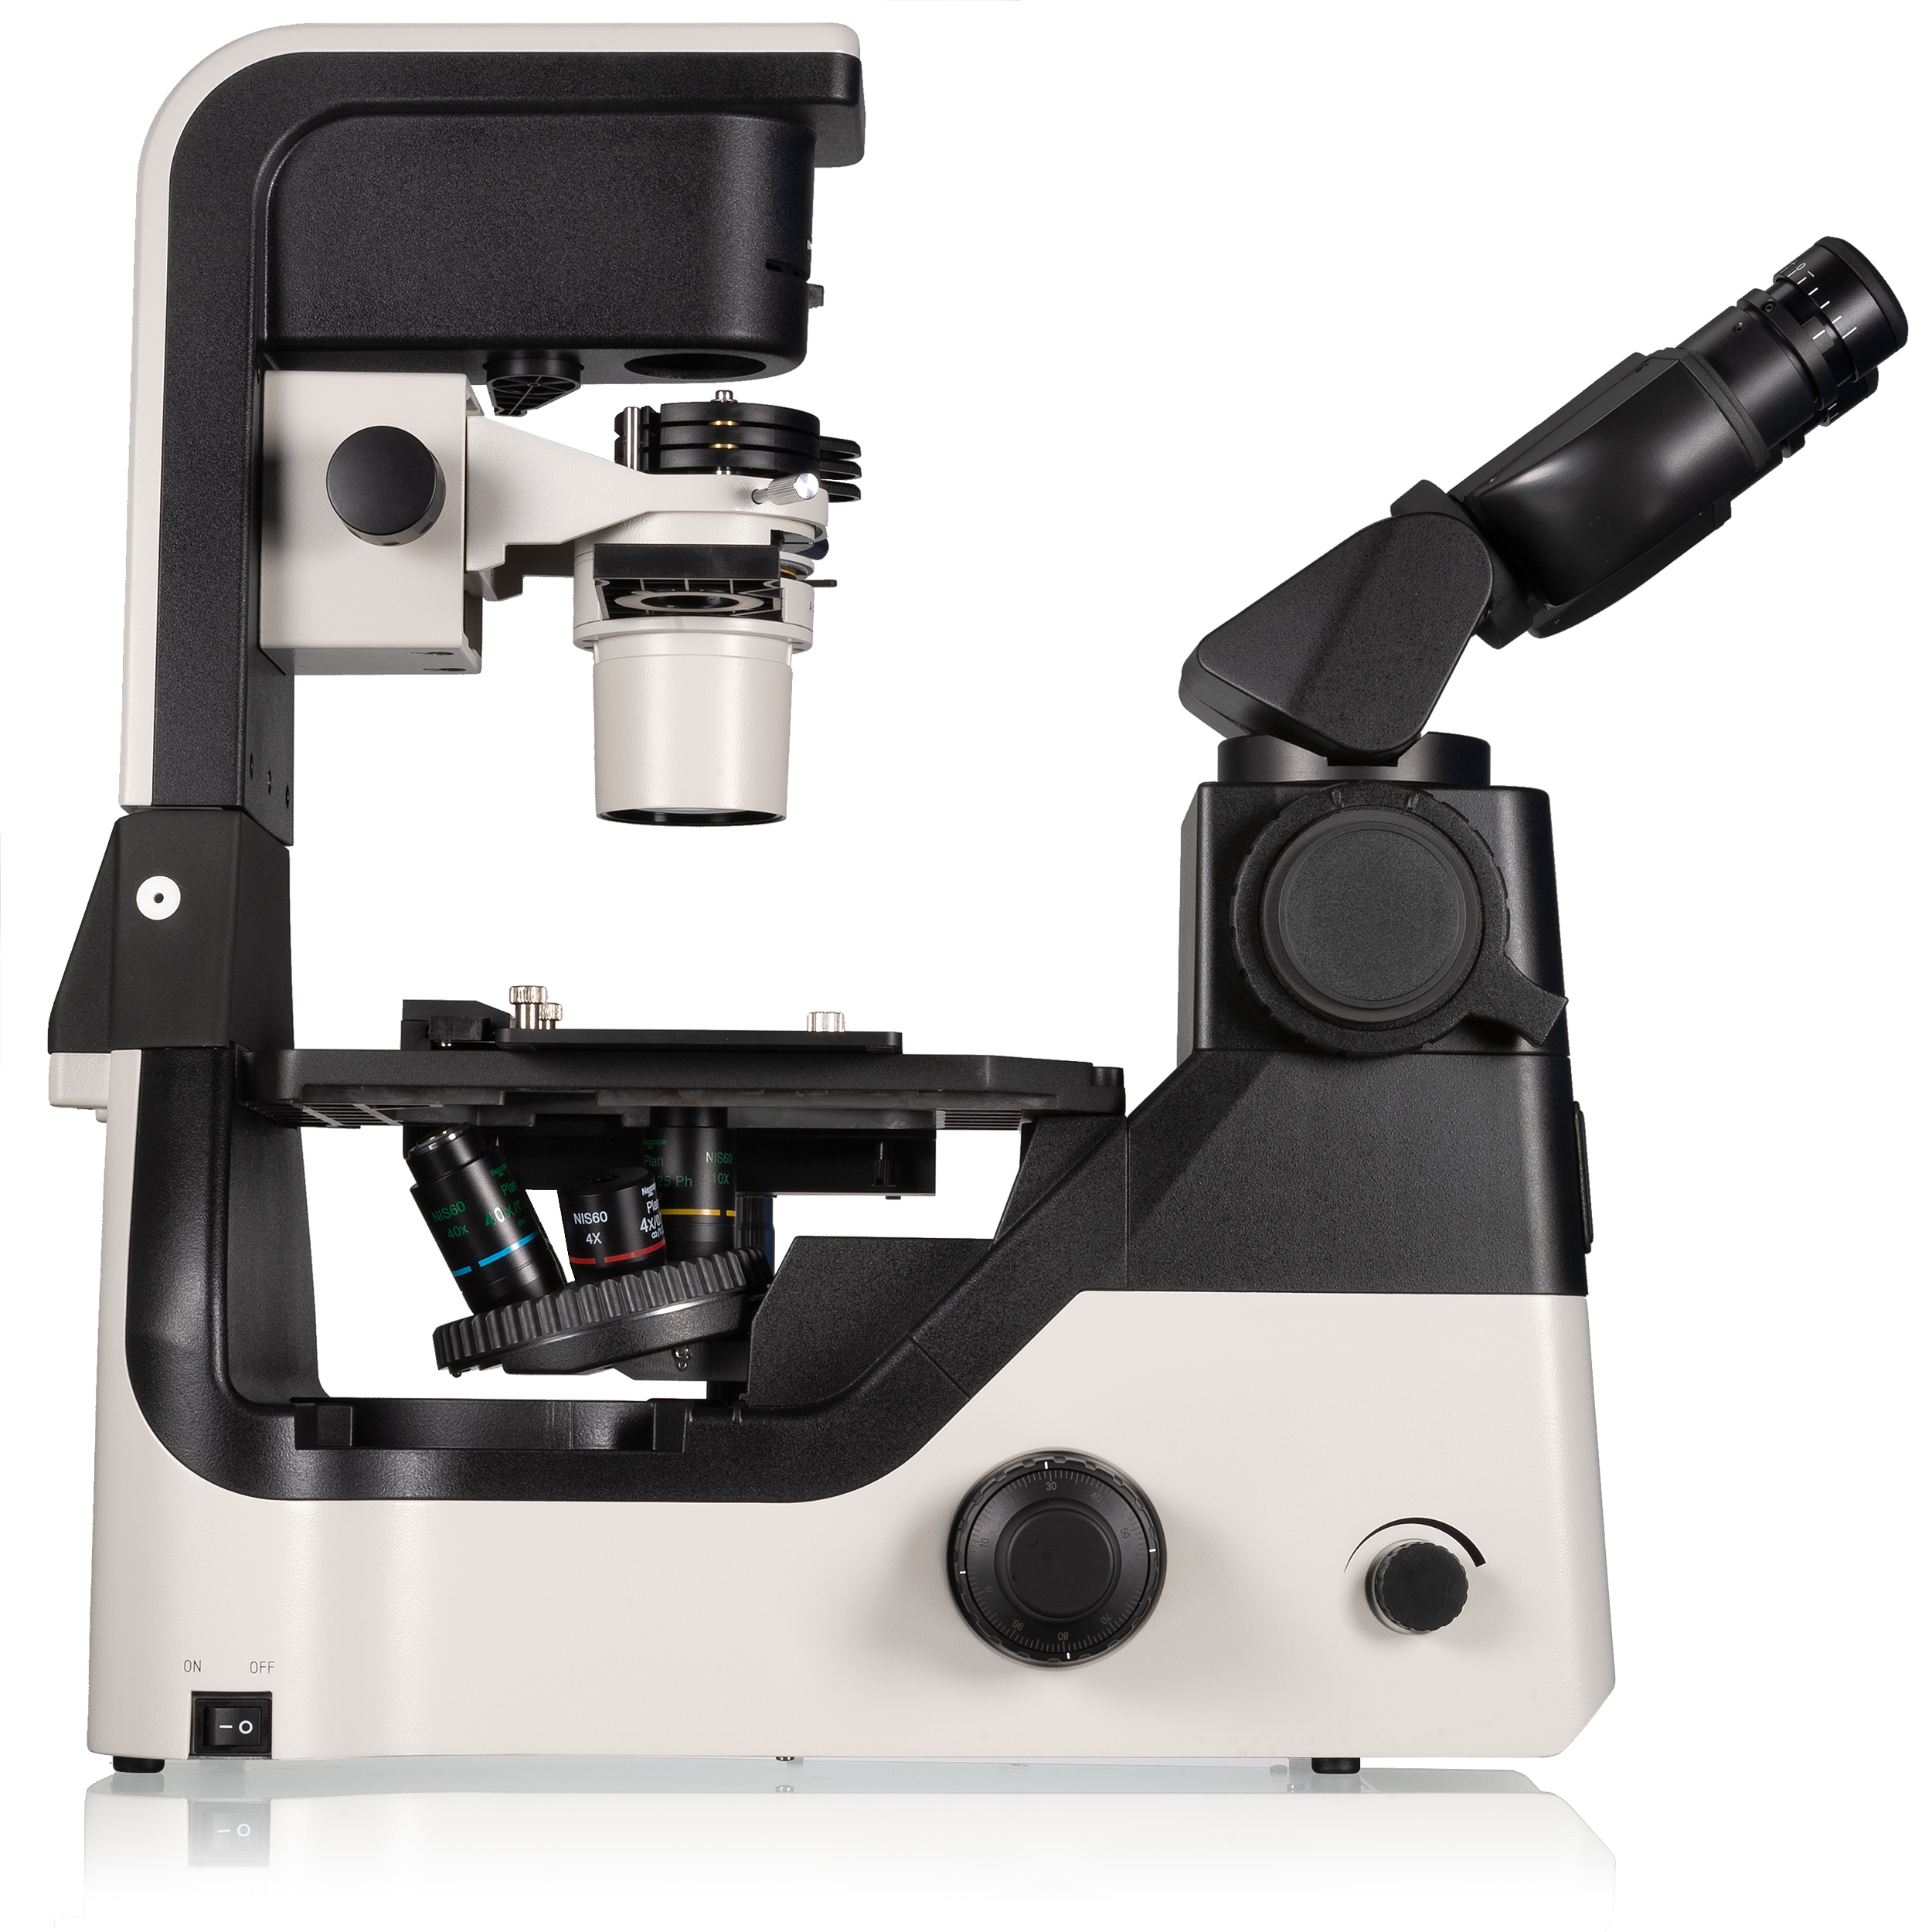 Nexcope NIB630 inverses Forschungsmikroskop mit kippbarer Beleuchtungseinheit